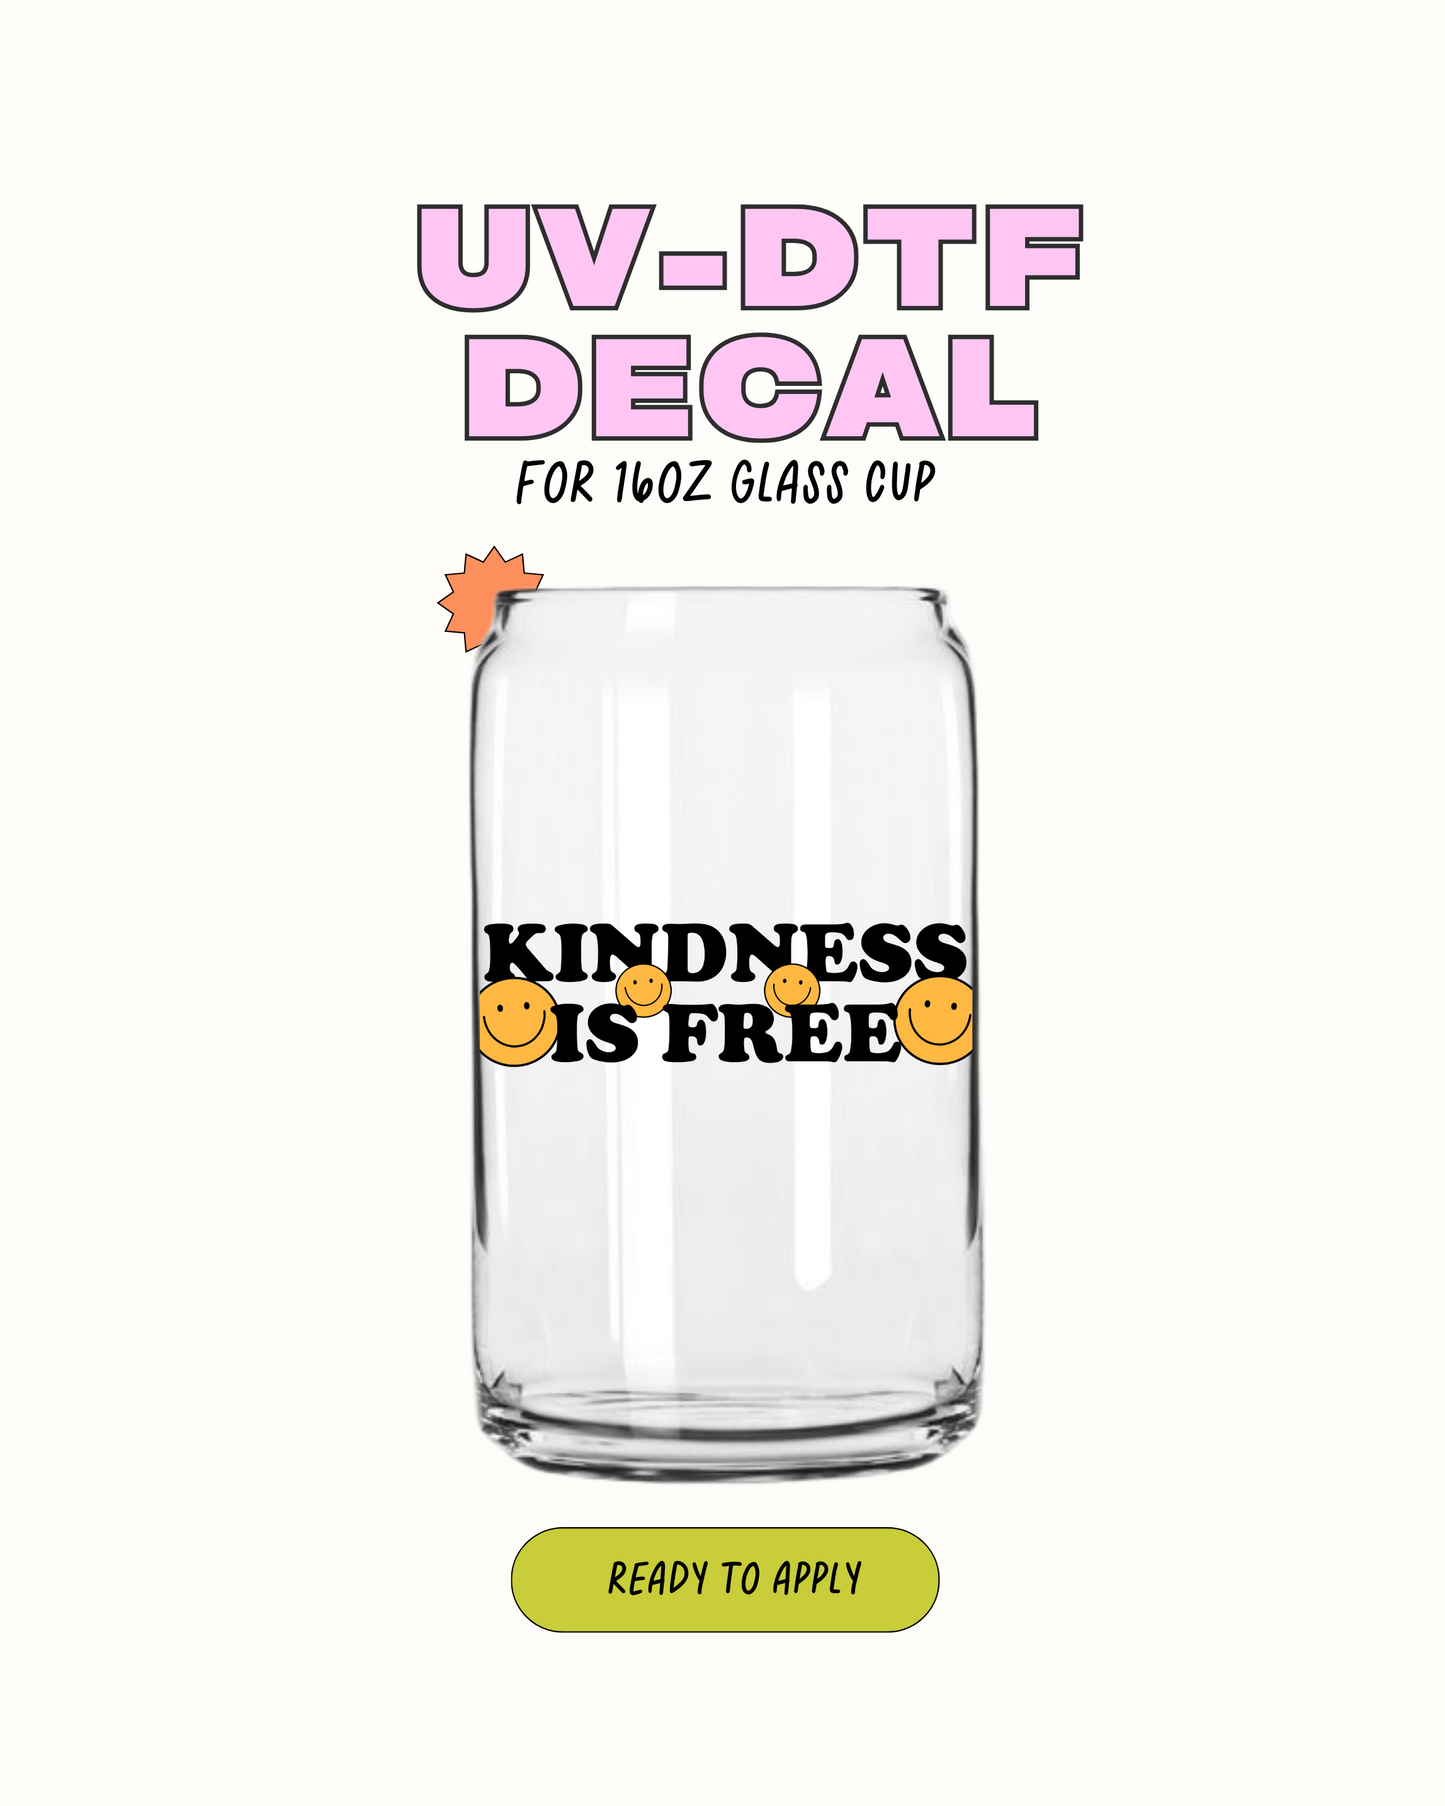 Kindness is free - UVDTF